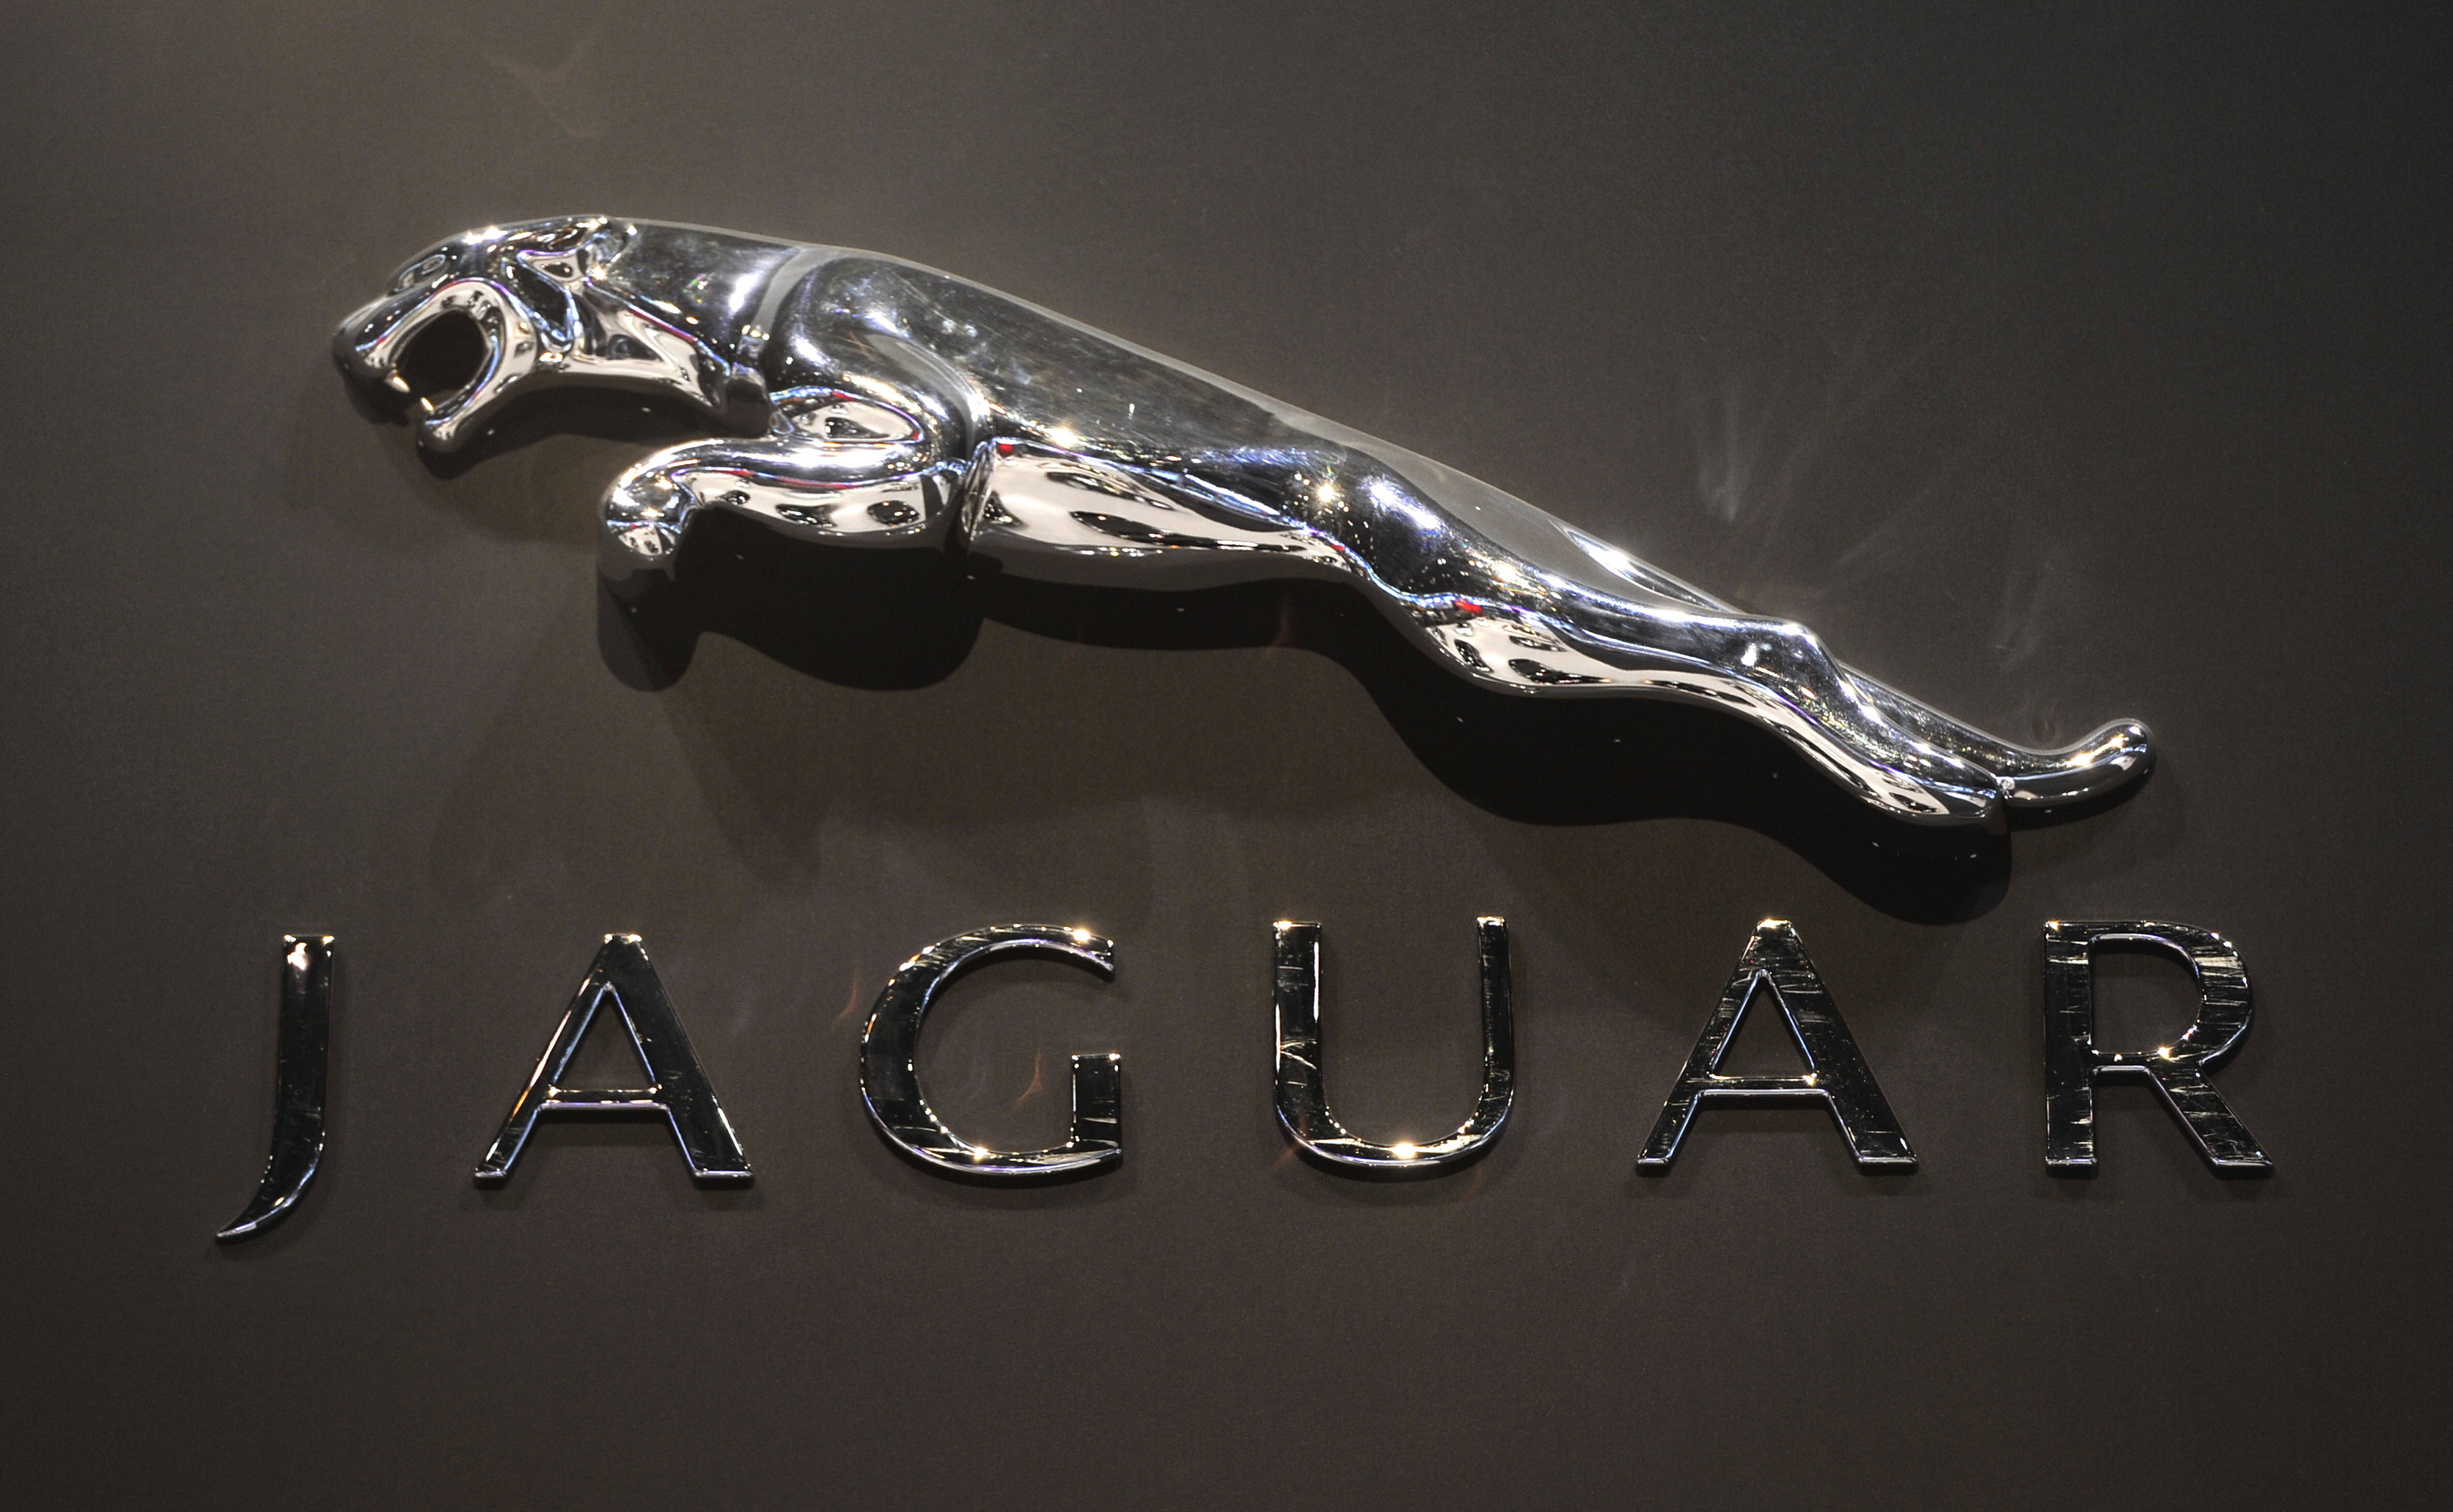 Awesome Jaguar Font Logo Car HD Wallpaper Picture For Desktop